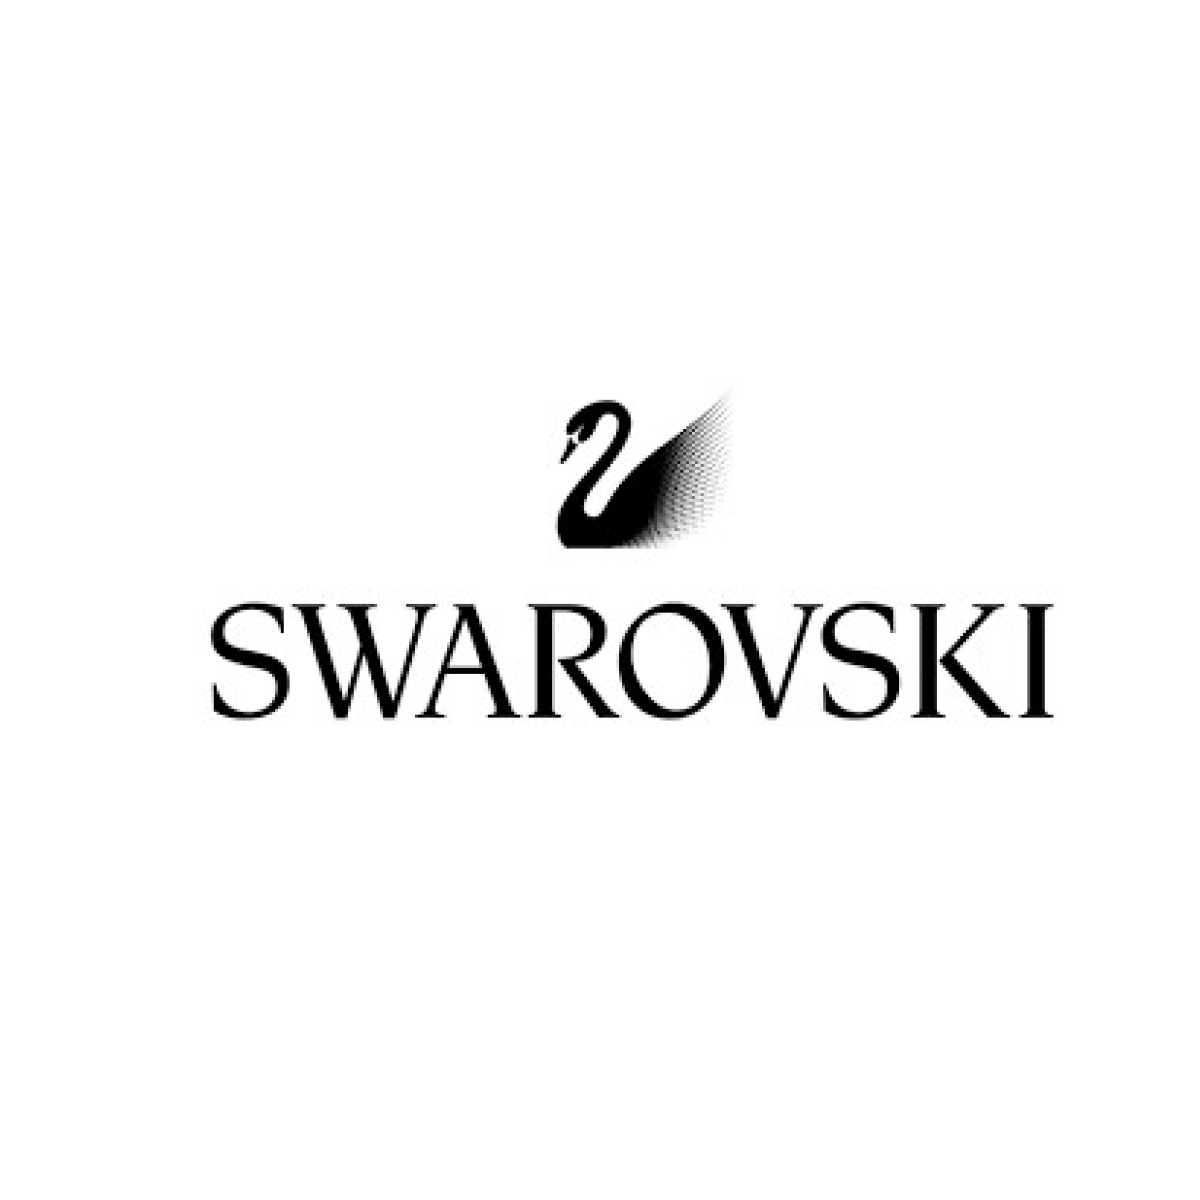 SWAROVSKI, Next Galleria Malls